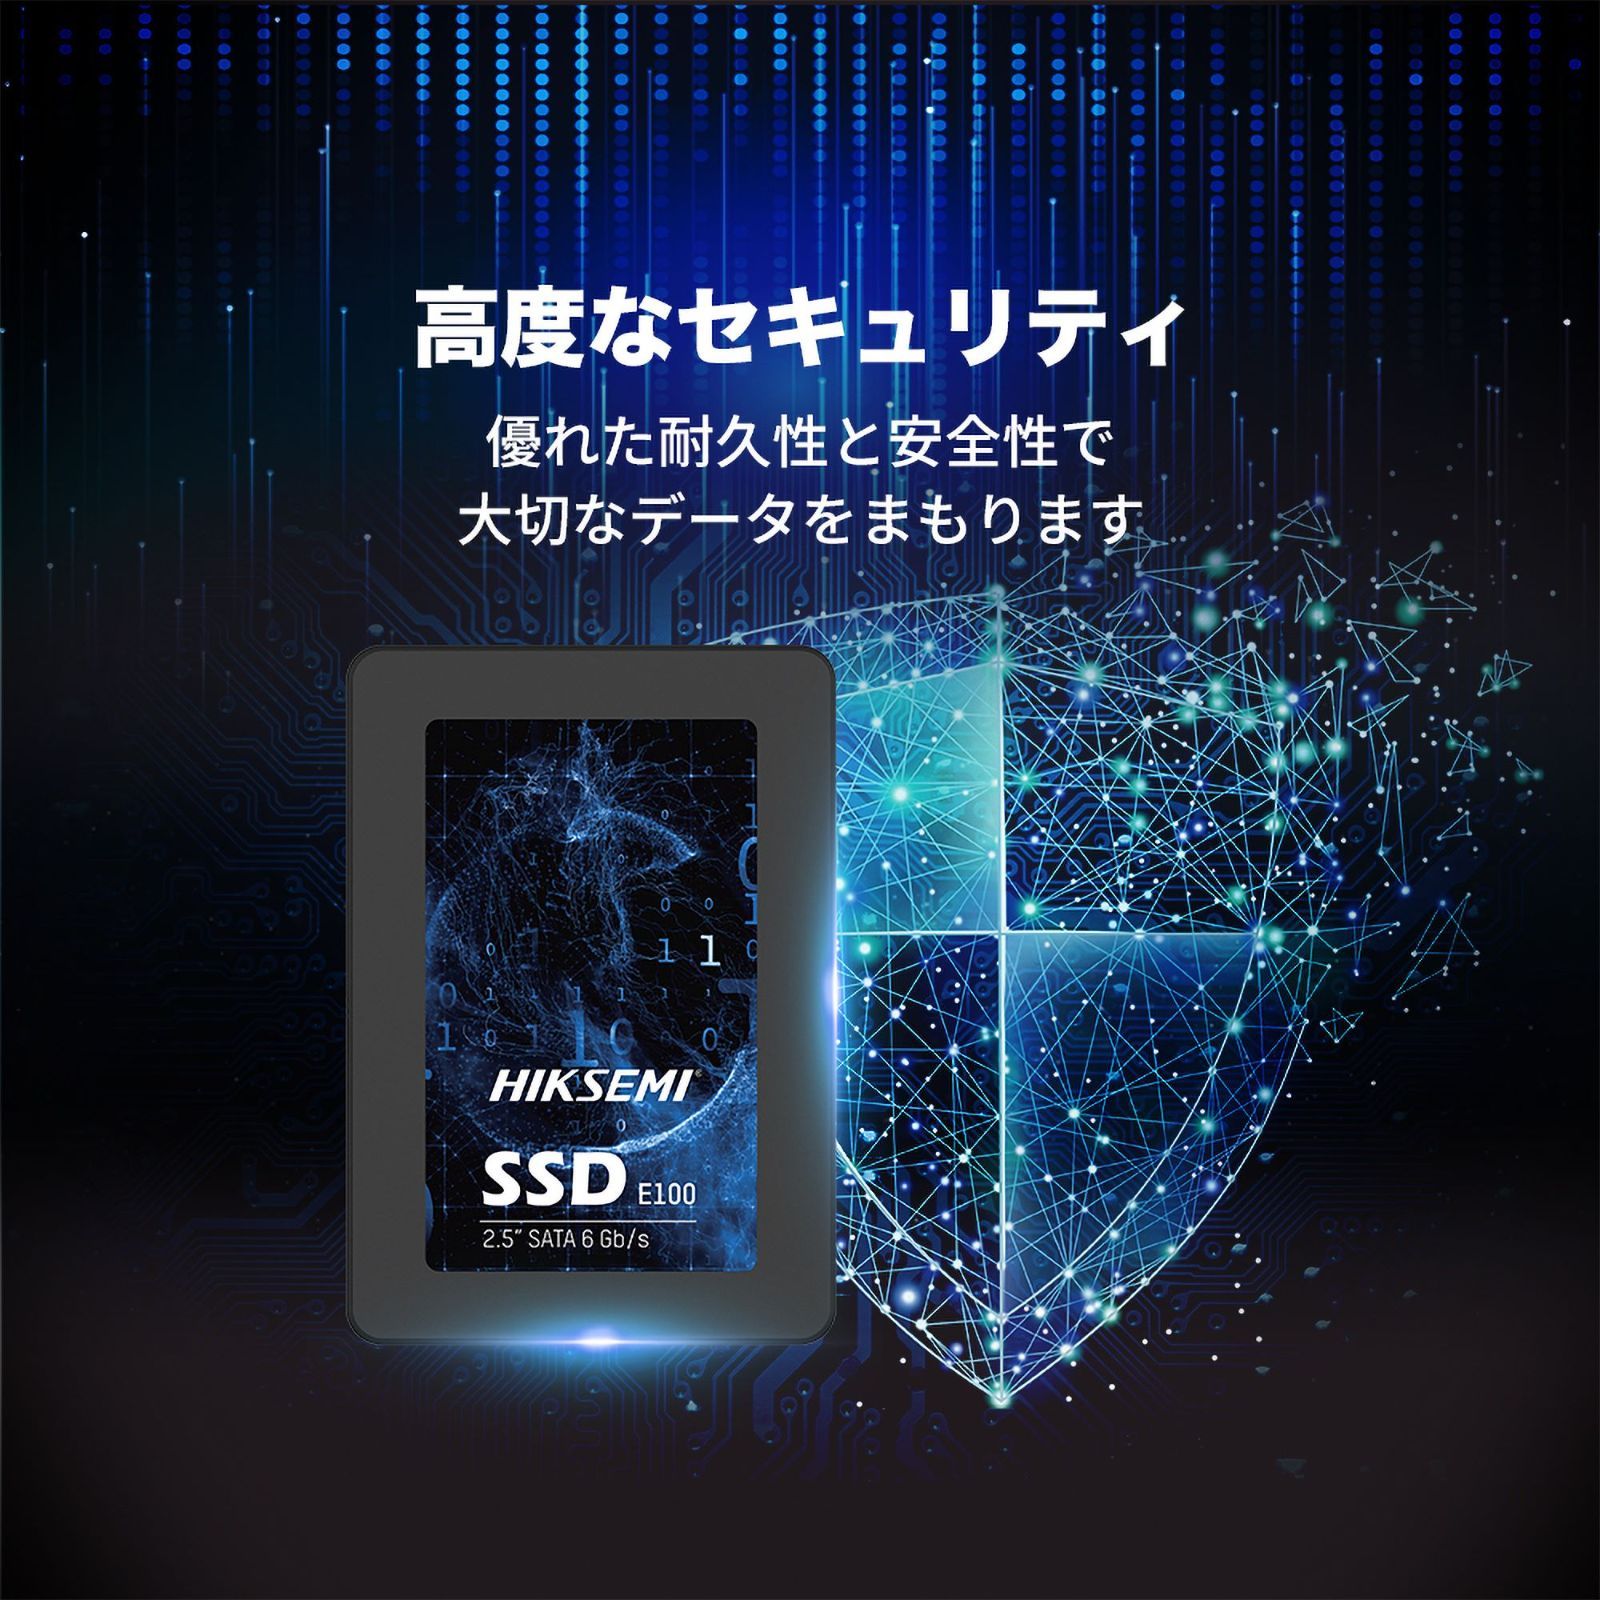 Monster Storage 256GB 内蔵SSD 2.5インチ 7mm SATA3 6Gb s 3D TLC NAND採用 PS4動作確認済 内蔵型 ssd 256gb MS95025ST-256GB